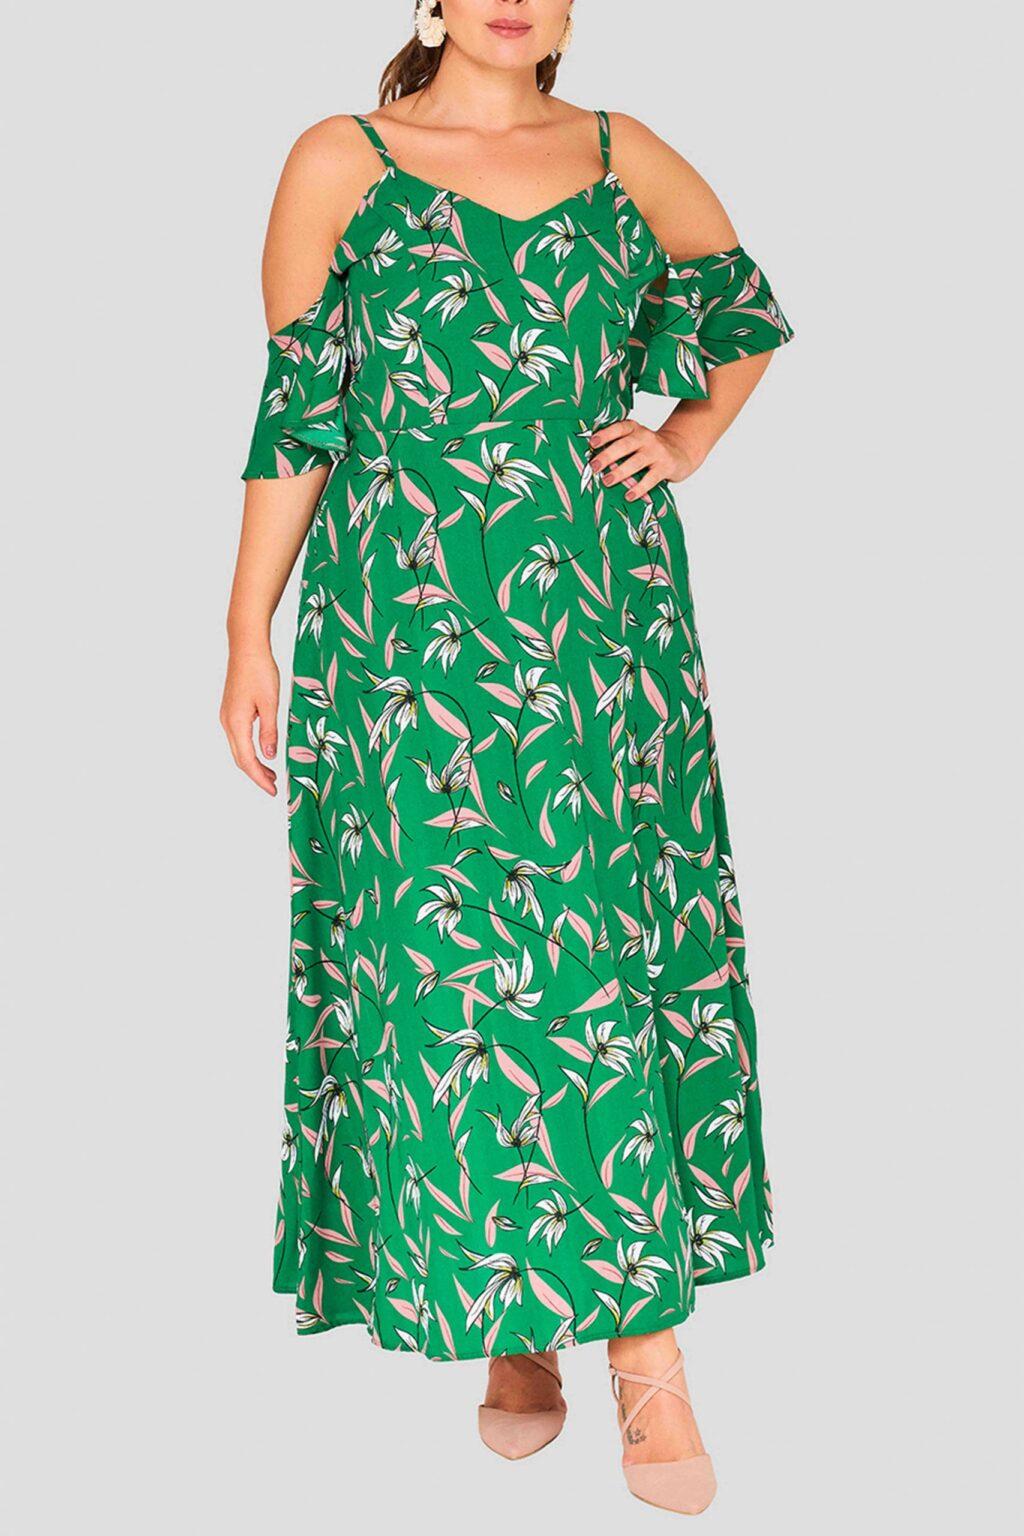 Plus Size Green Maxi Dress | Curvy Chic ...